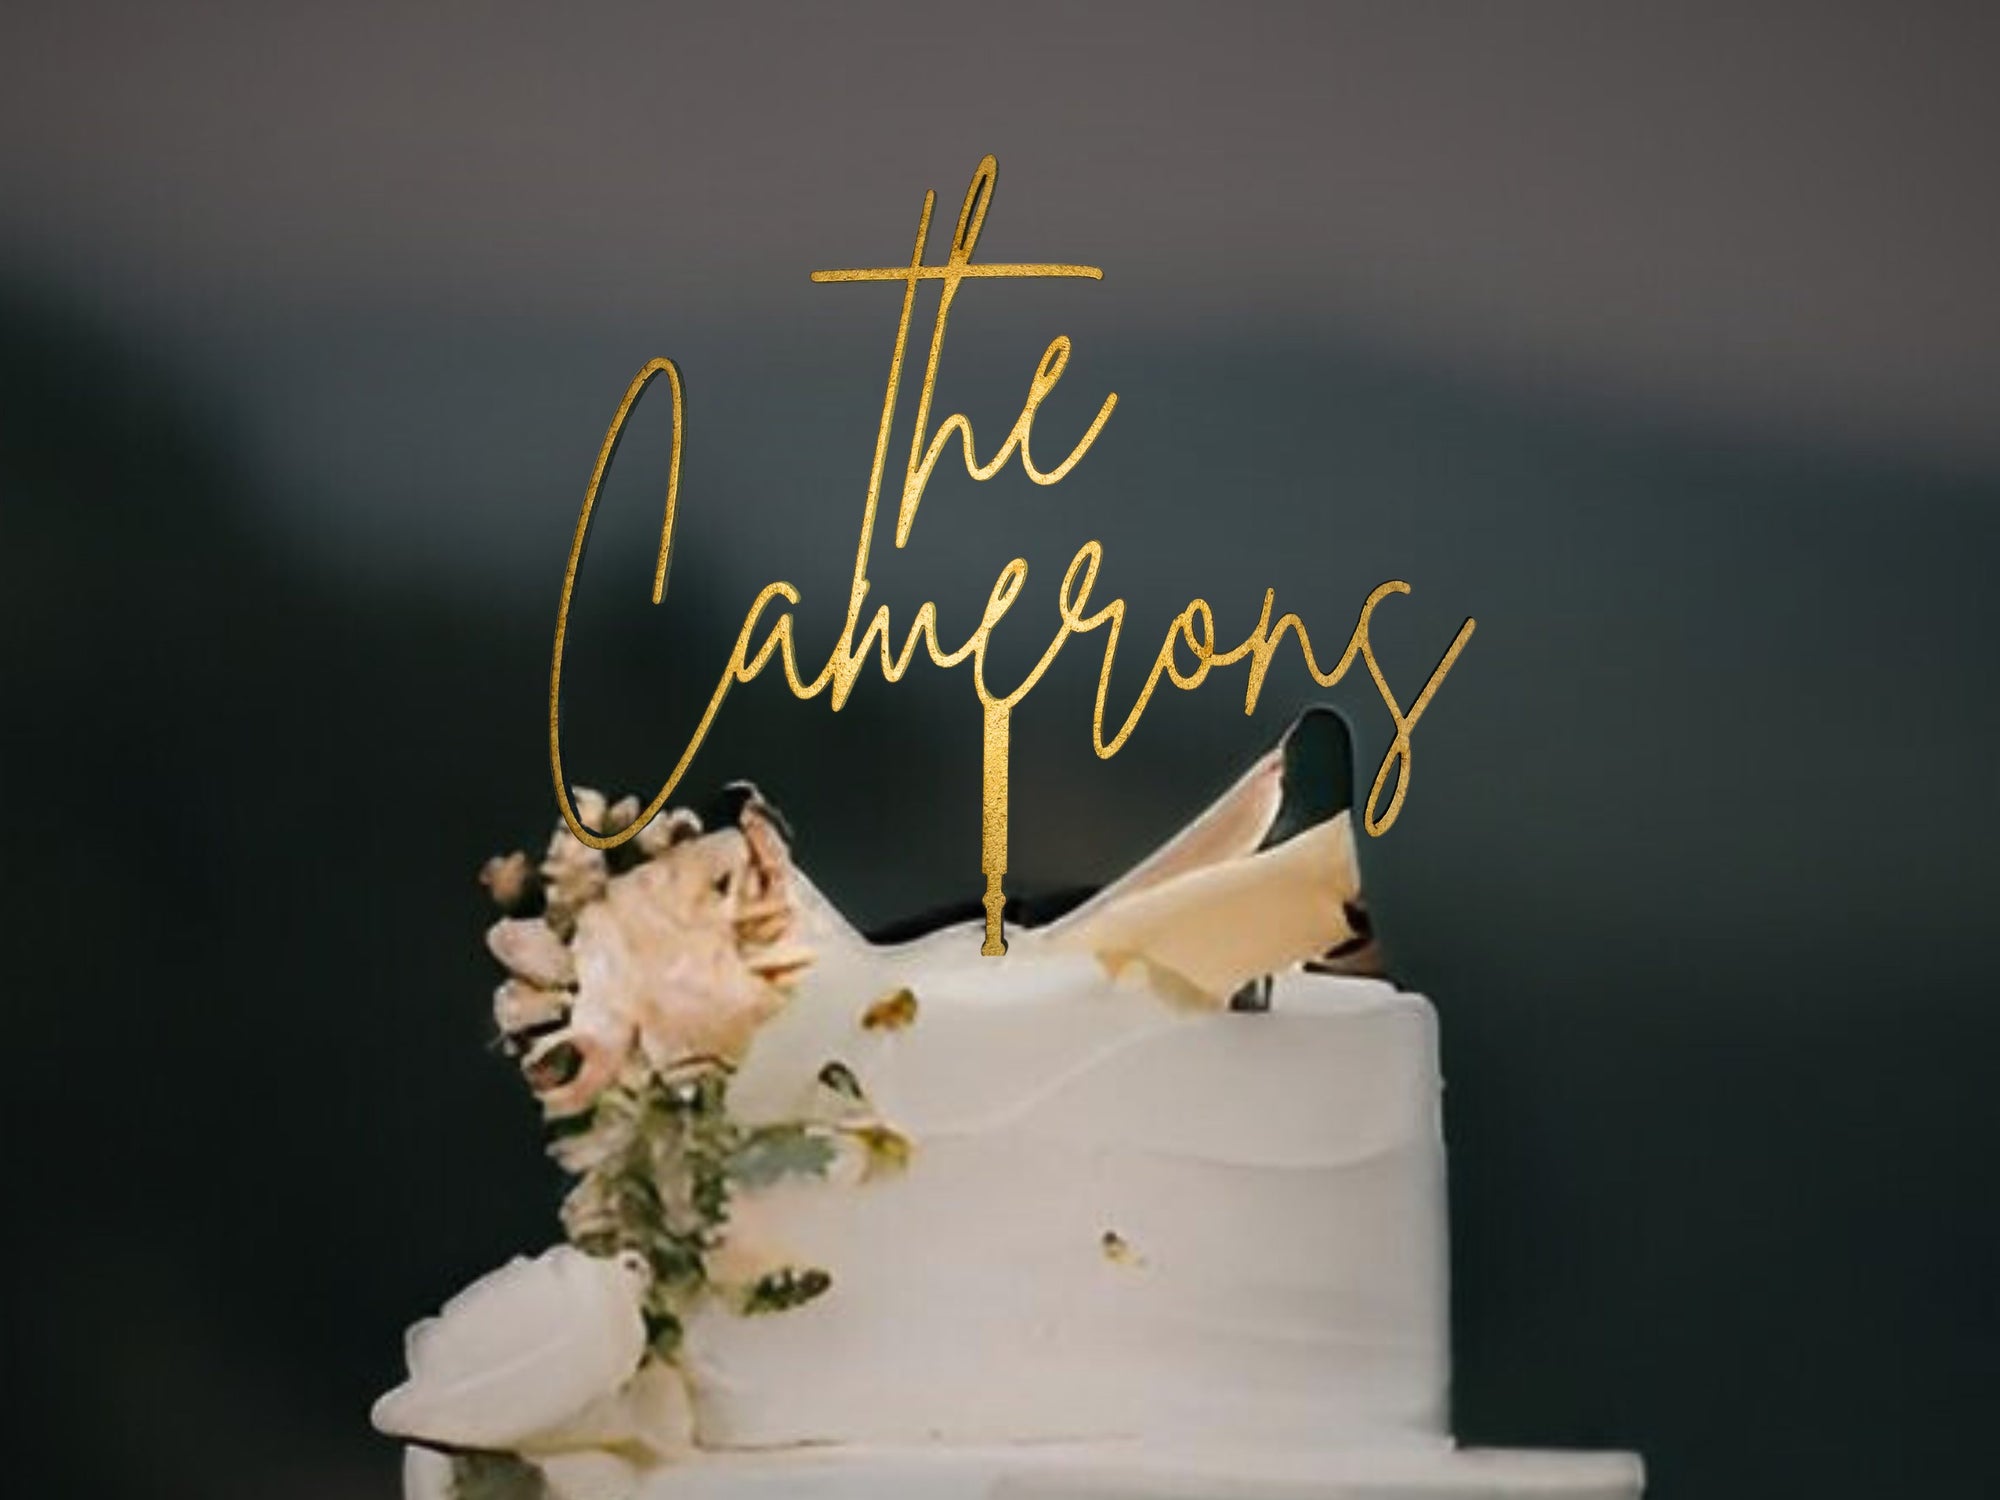 Personalised Mr & Mrs Wedding Cake Topper